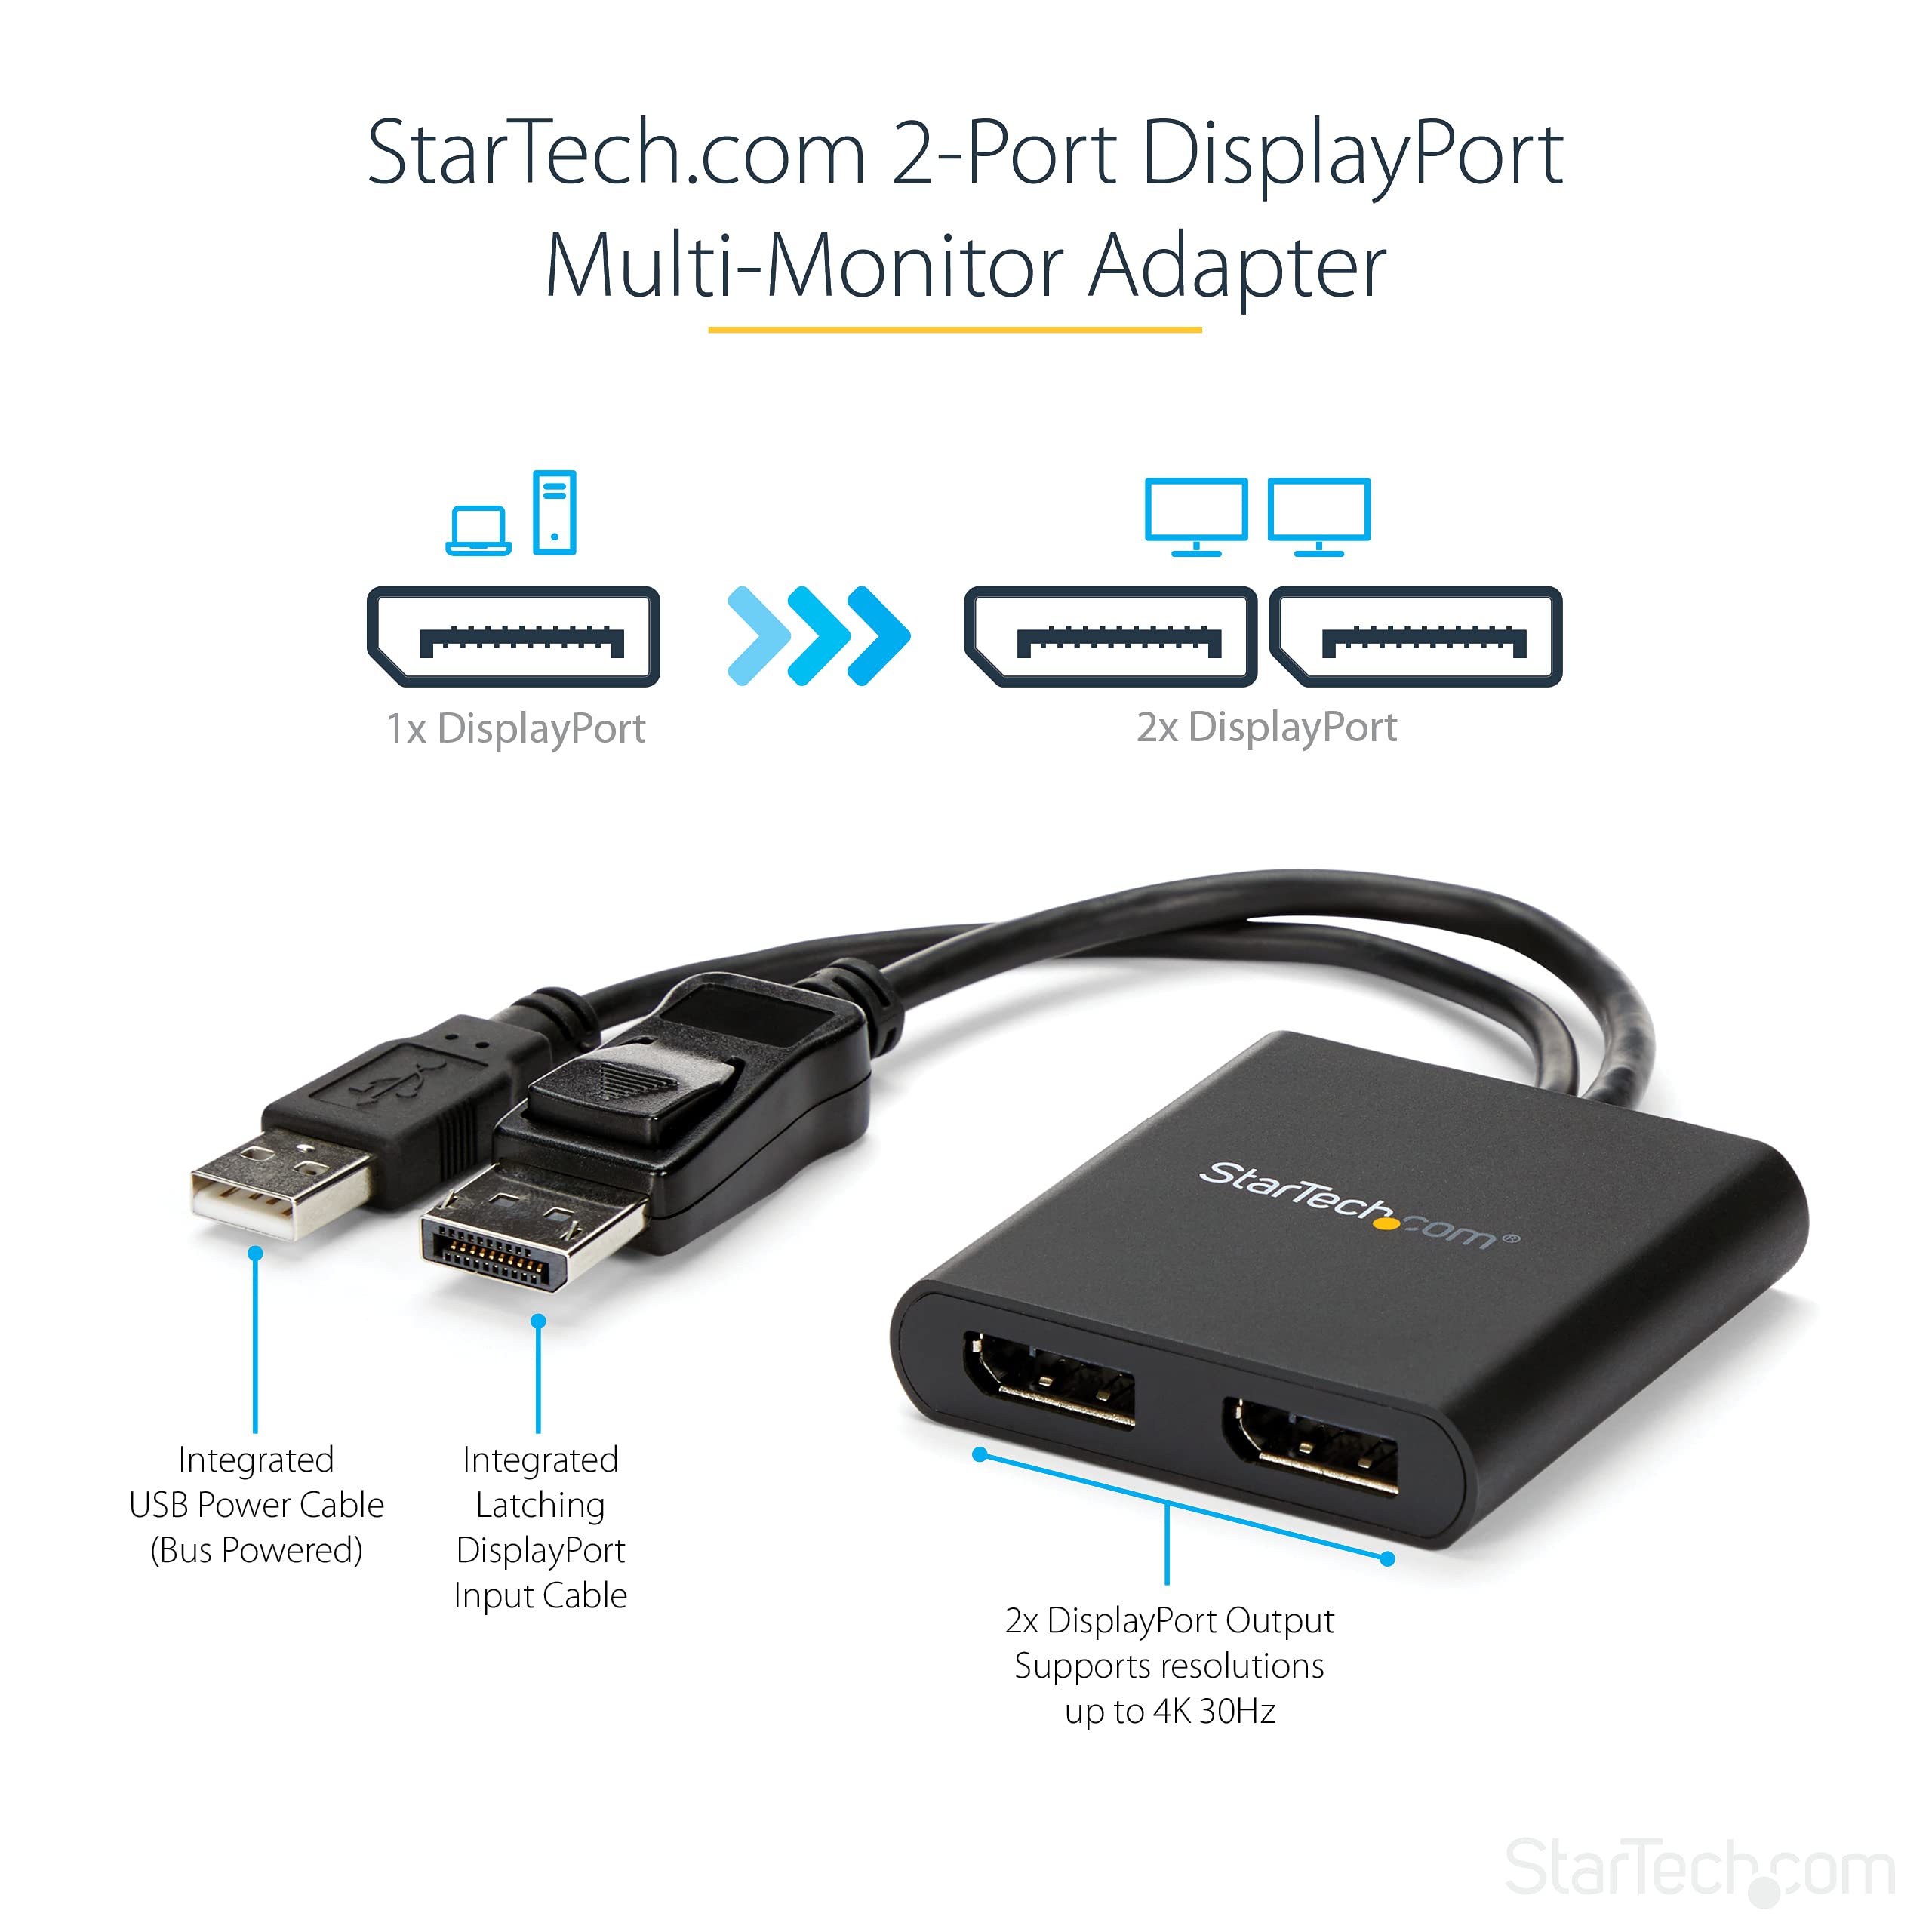 StarTech.com Dual-Monitor DisplayPort 1.2 Splitter, DisplayPort to 2x DP Multi-Monitor Adapter, Dual 4K 30Hz or 1080p 60Hz Computer MST Hub, USB Bus-Powered, Windows Only (MSTDP122DP)